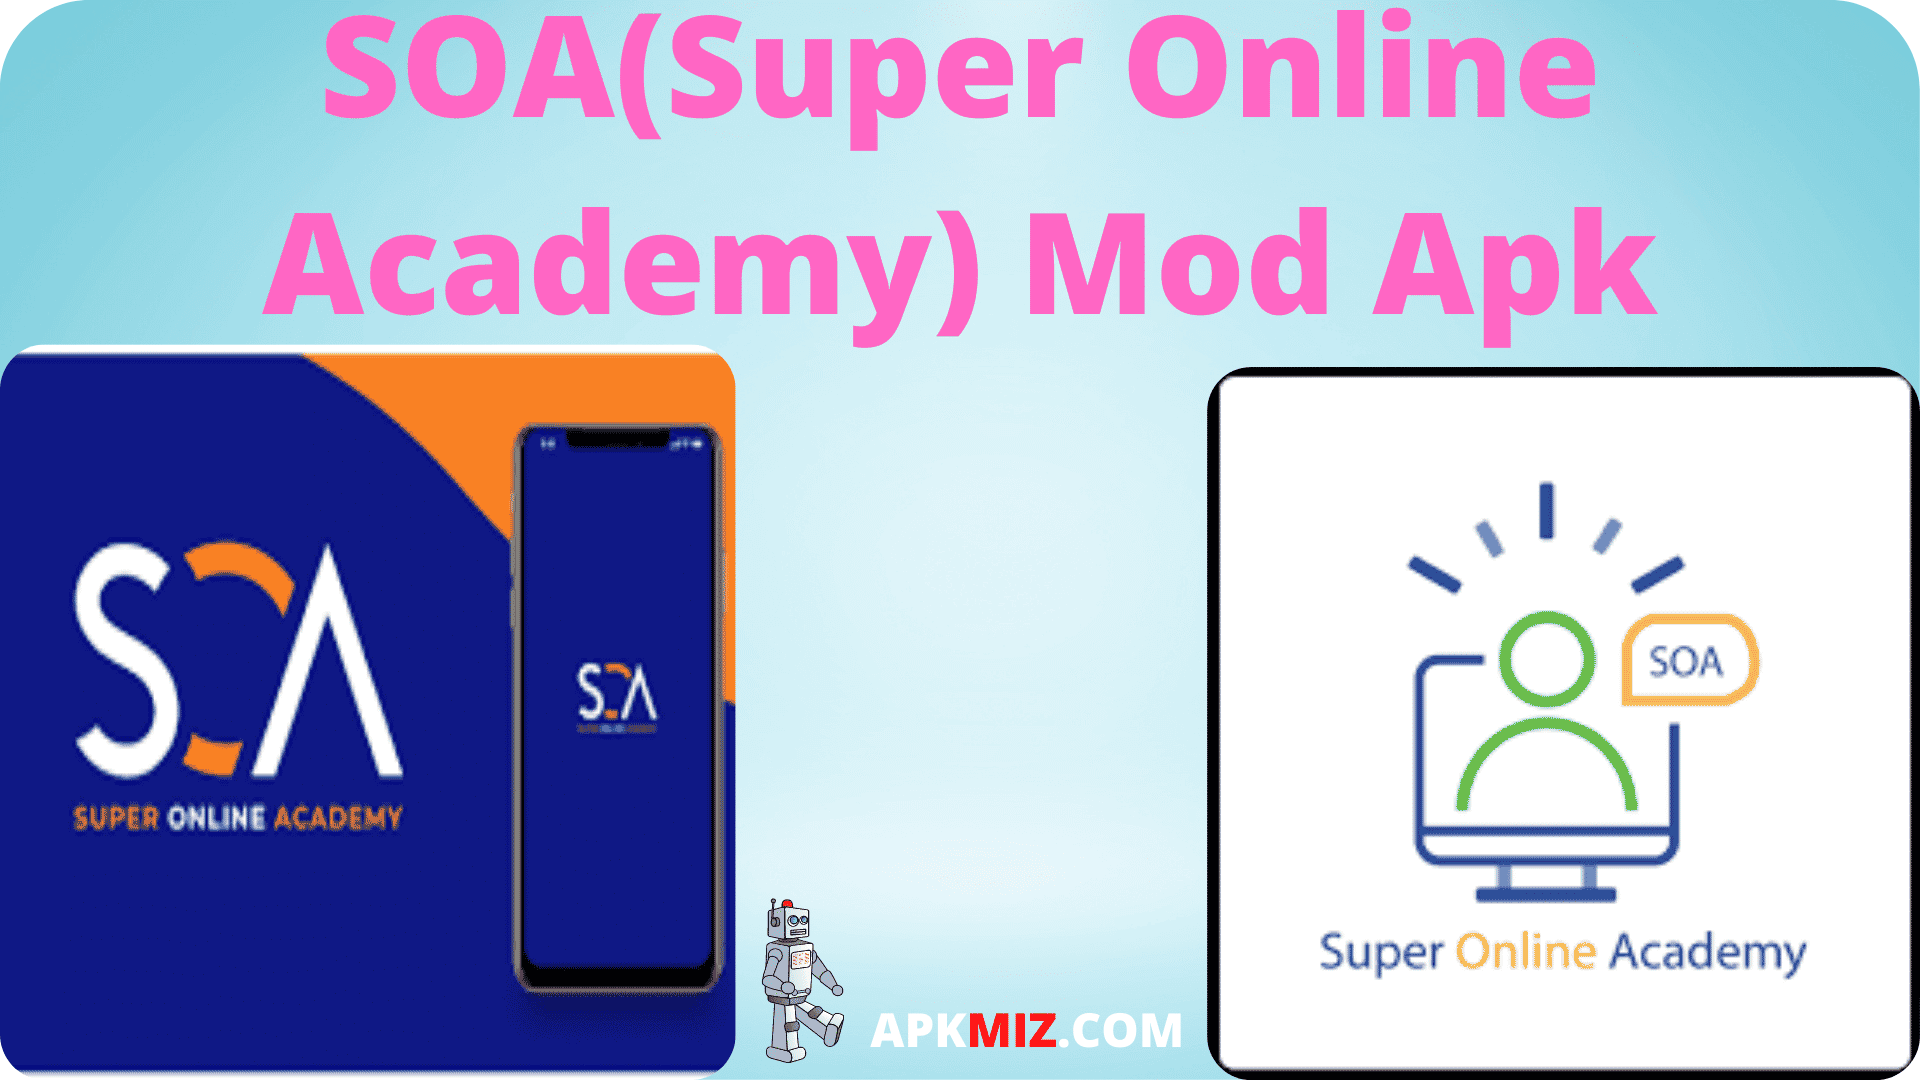 SOA(Super Online Academy) Mod Apk